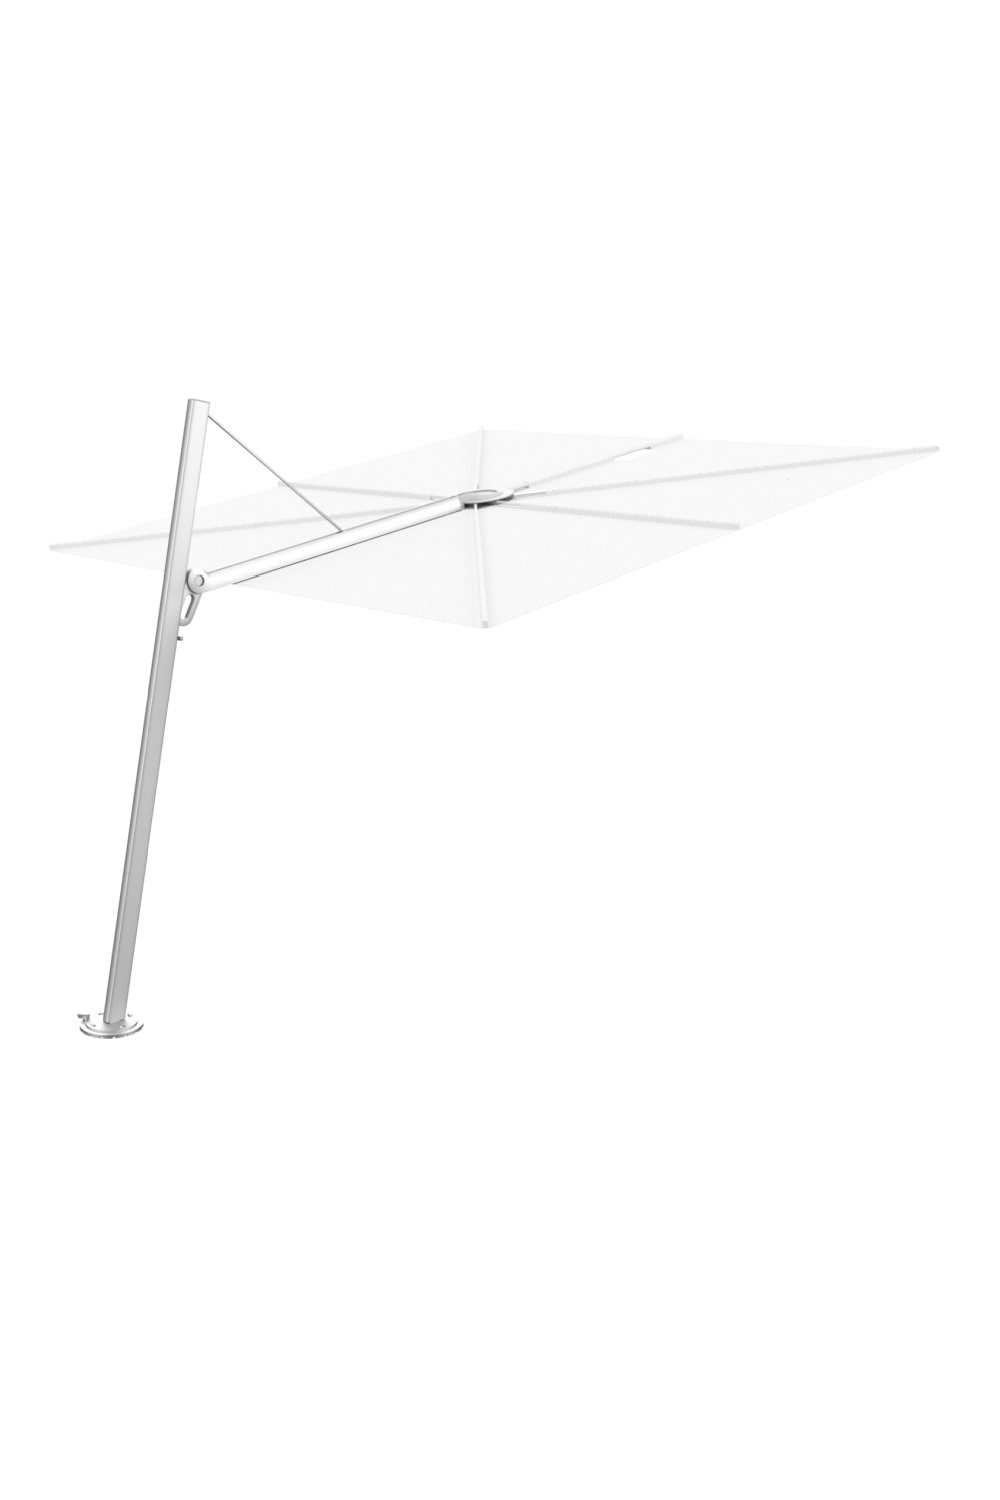 Cantilever Outdoor Umbrella ( 8’ 2’’) | Umbrosa Spectra | Oroa.com